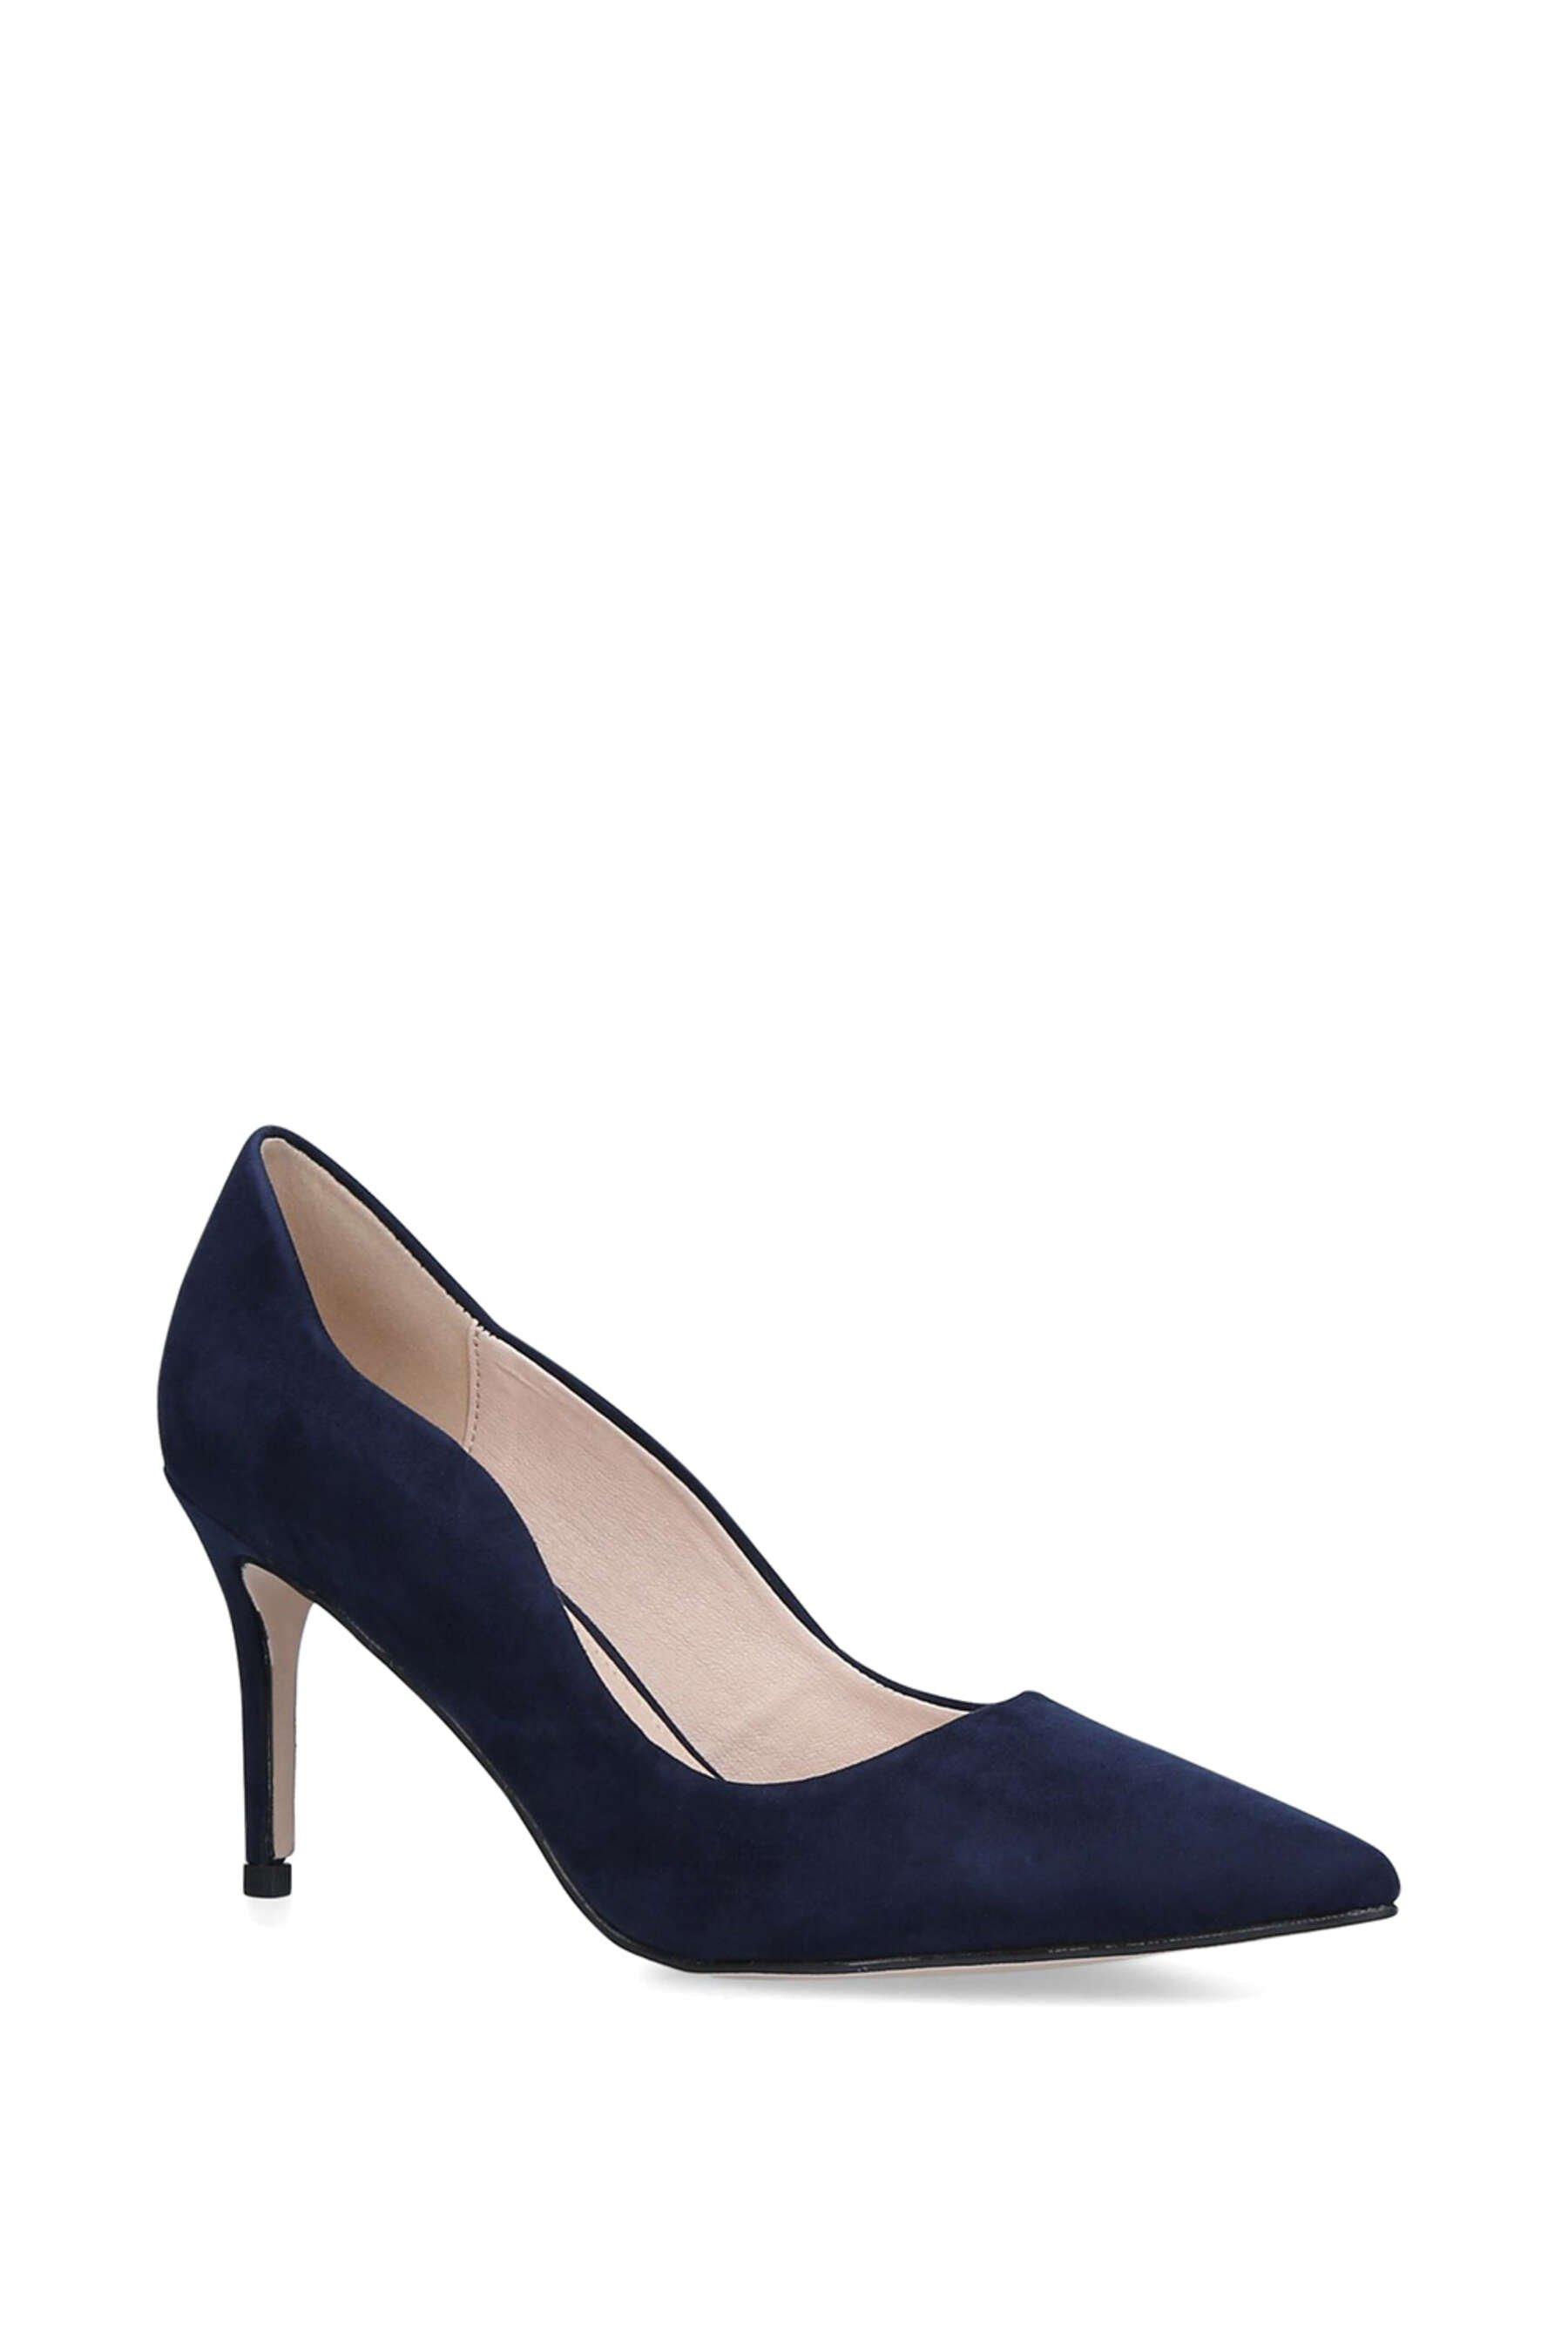 Miss KG Steffan rose gold heels size 8.5 | Gold heels, Rose gold heels,  Heels